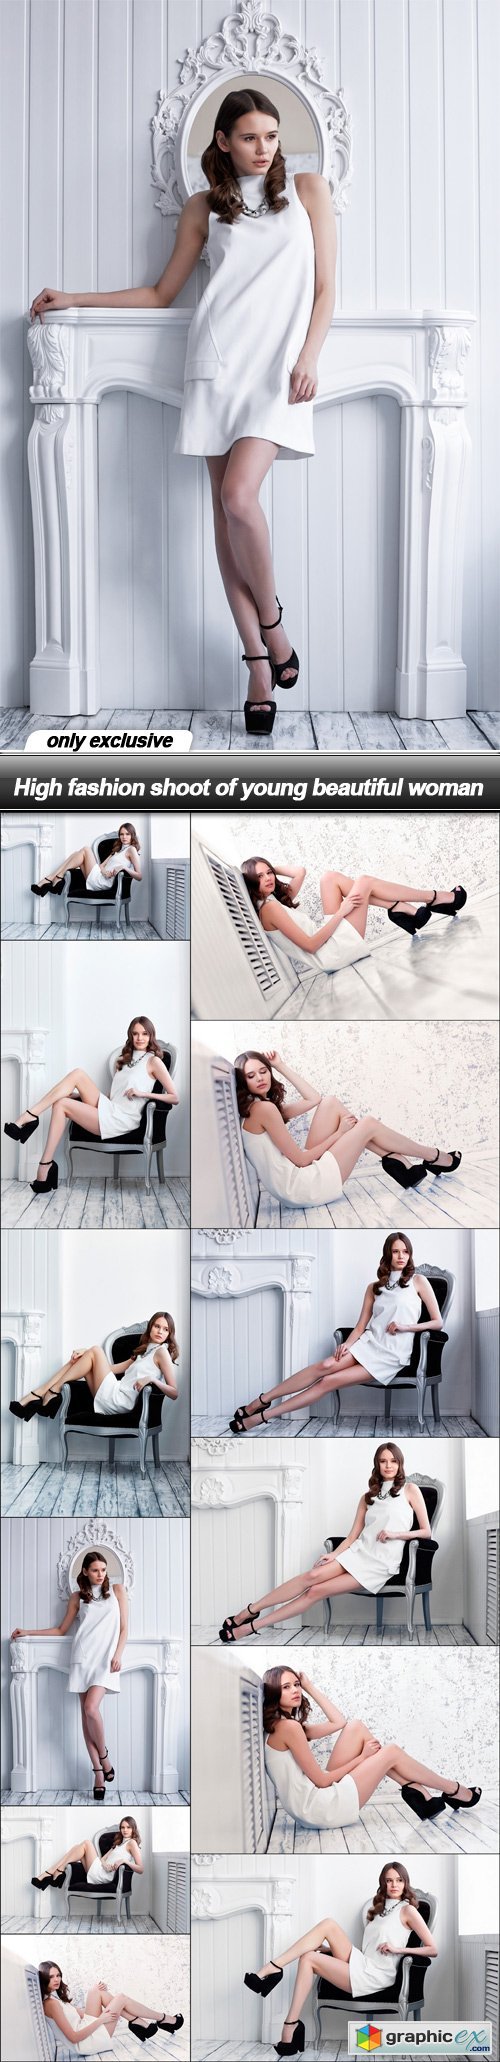 High fashion shoot of young beautiful woman - 13 UHQ JPEG